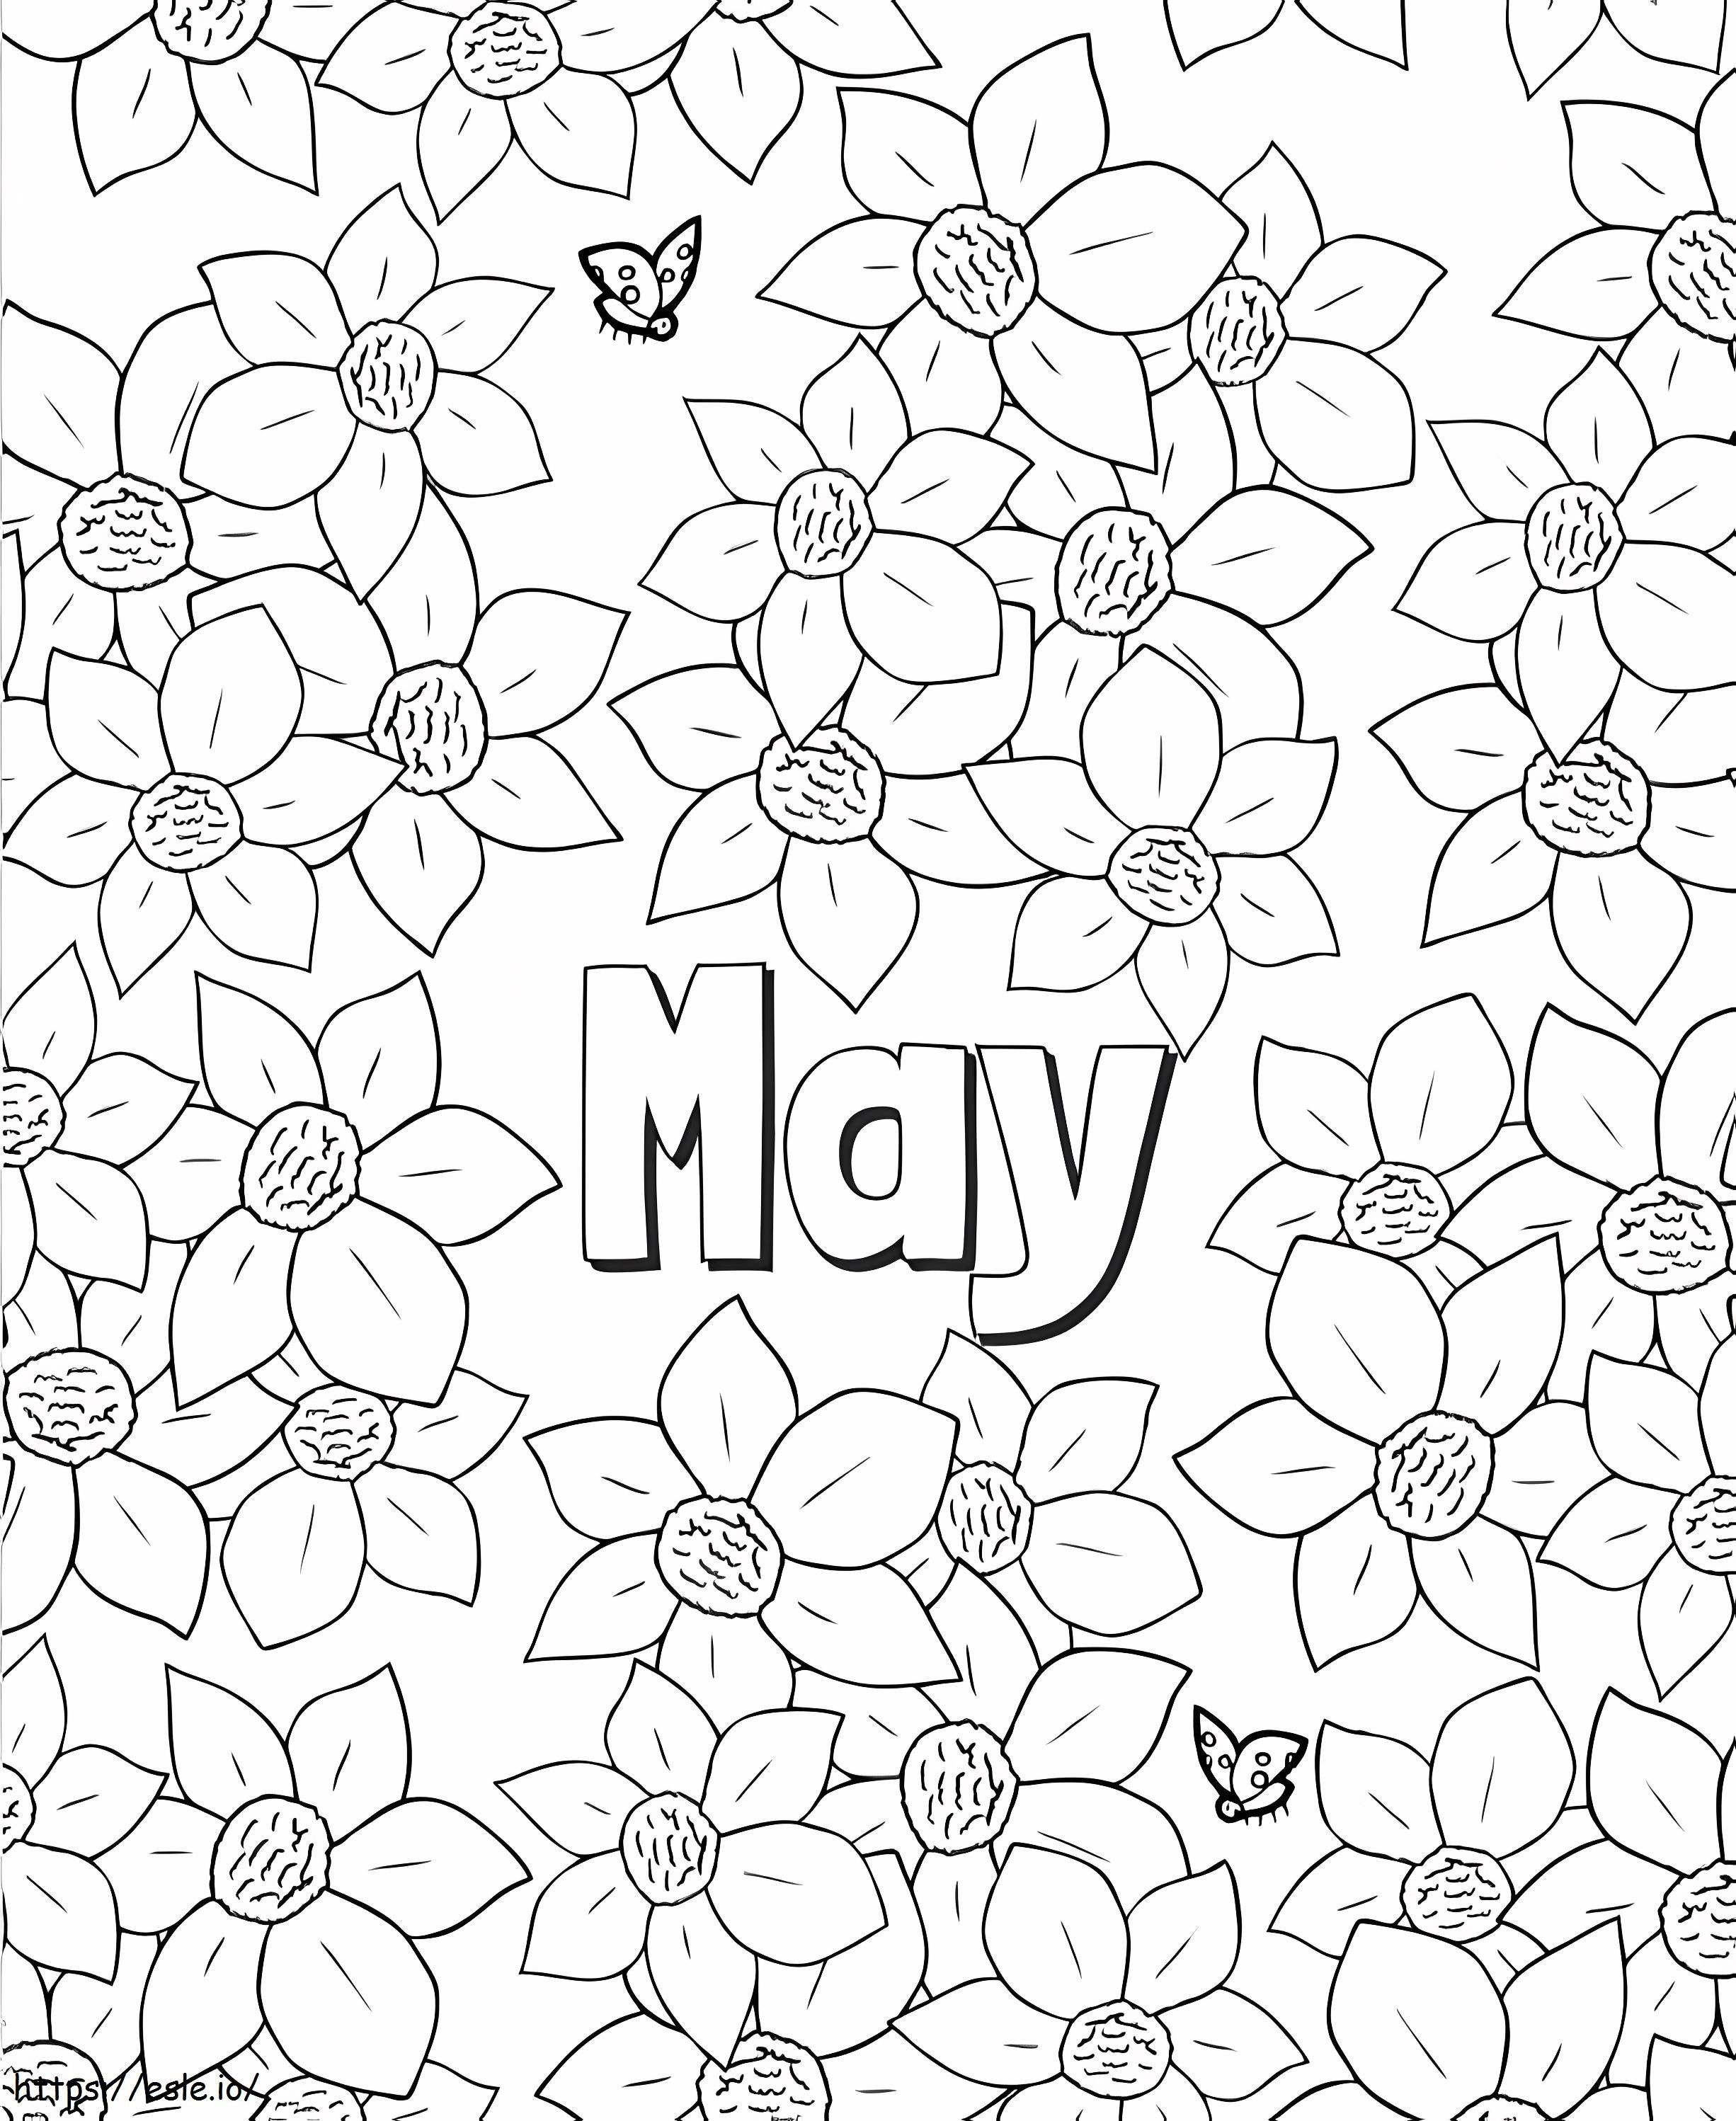 May 9 coloring page